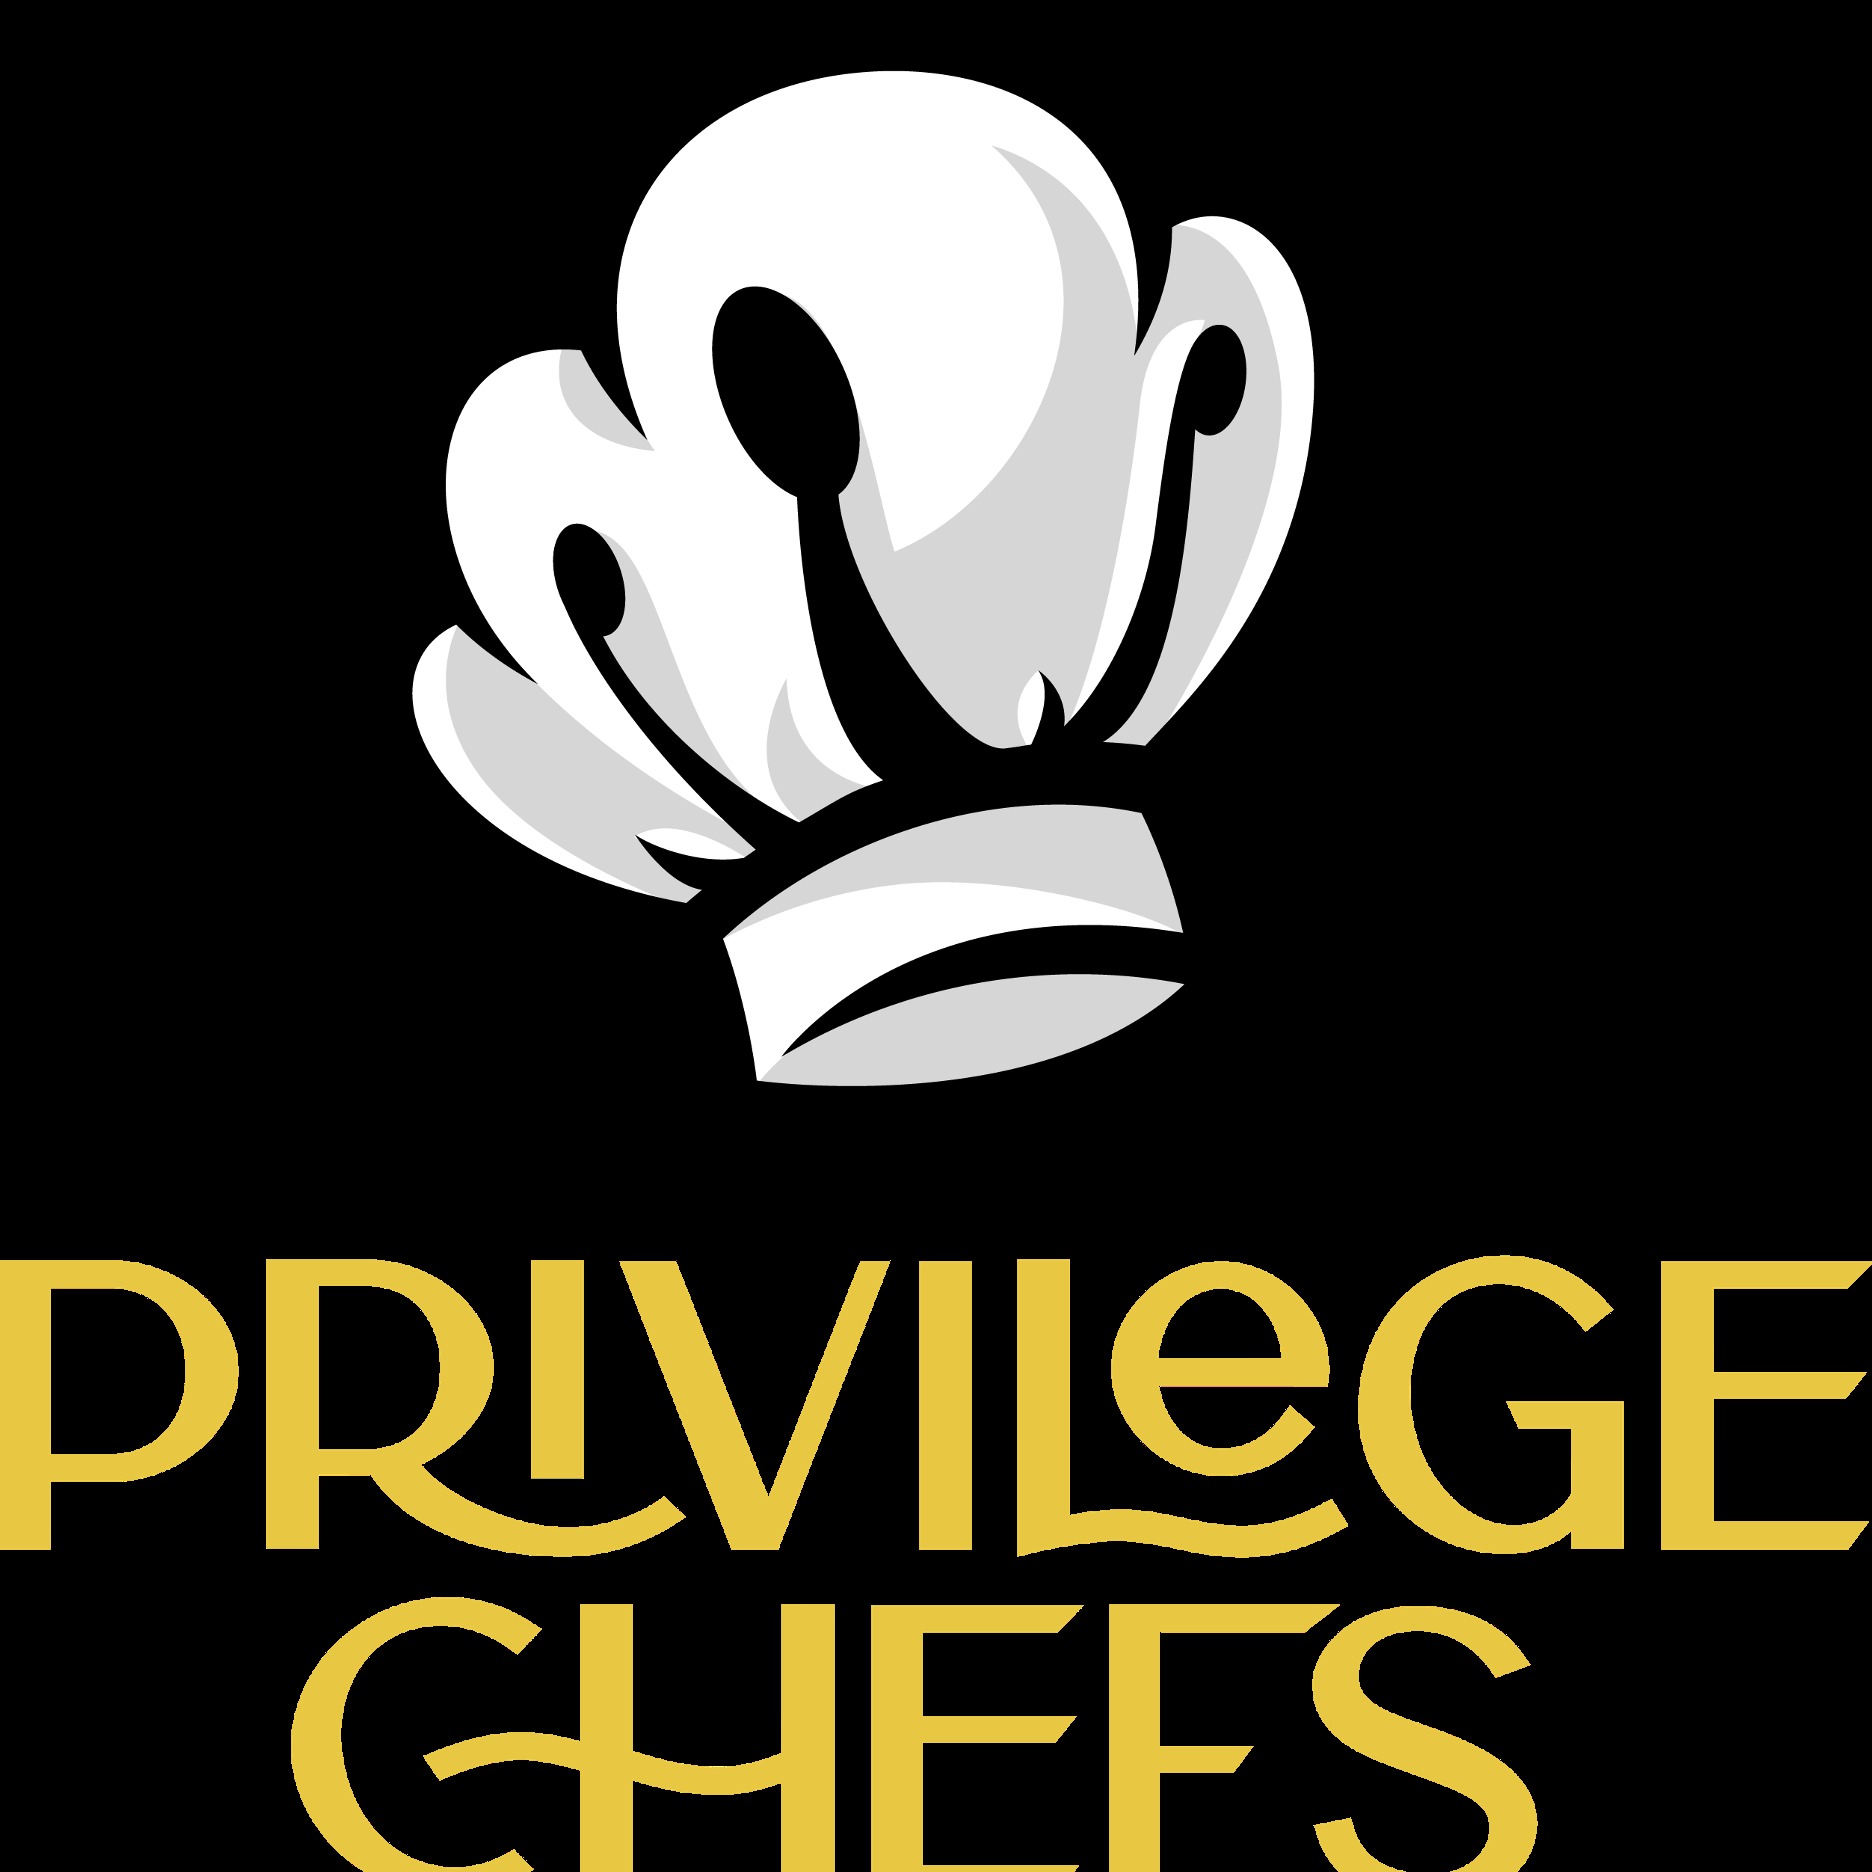 Photo from Privilege Chefs